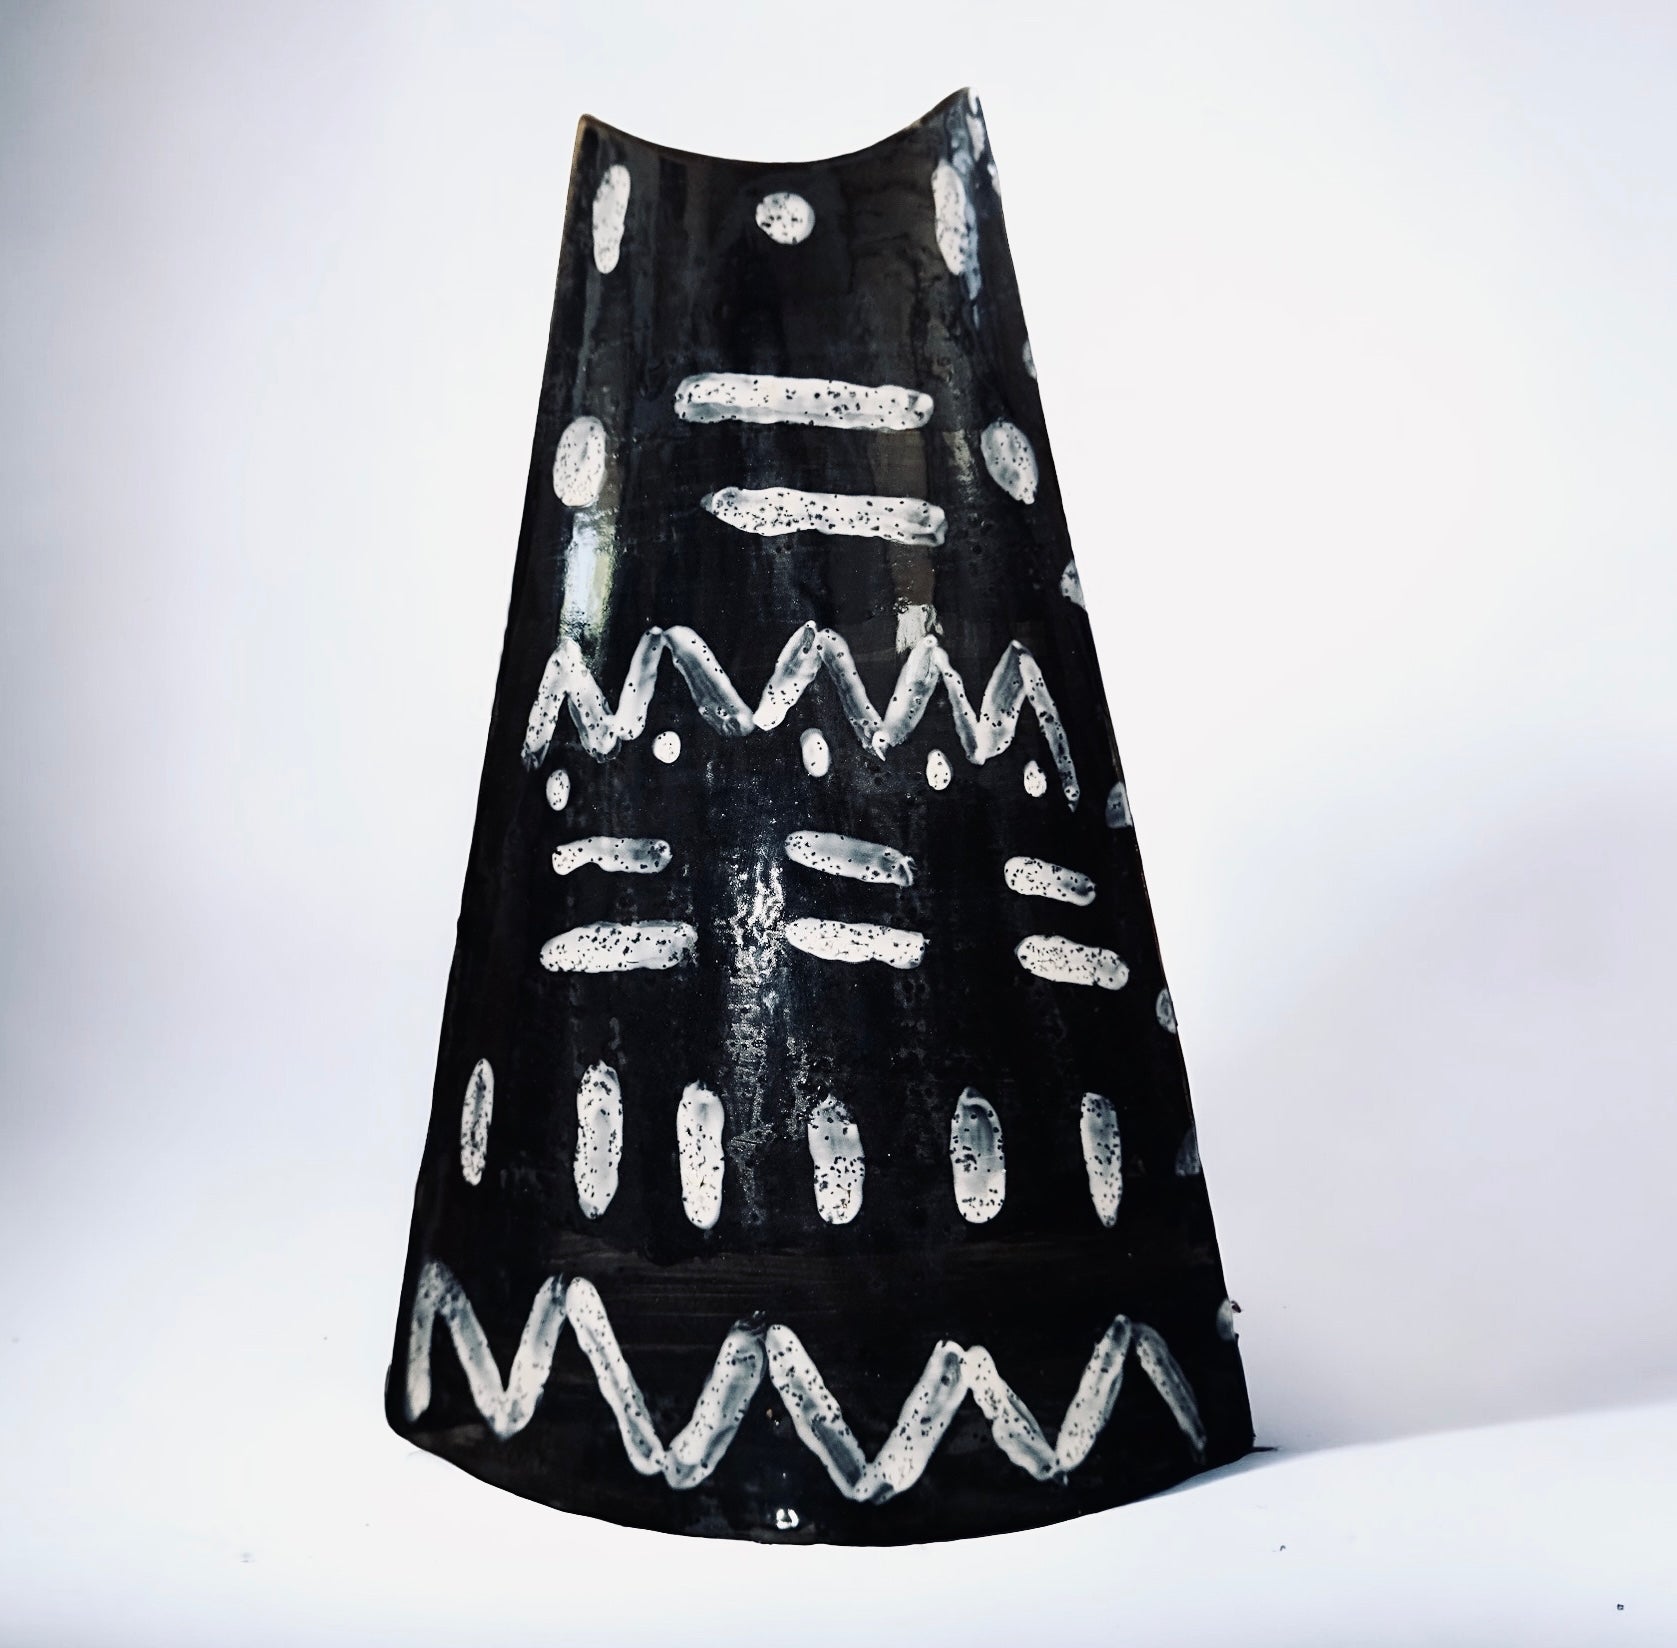 Black and White Pyramid Vase